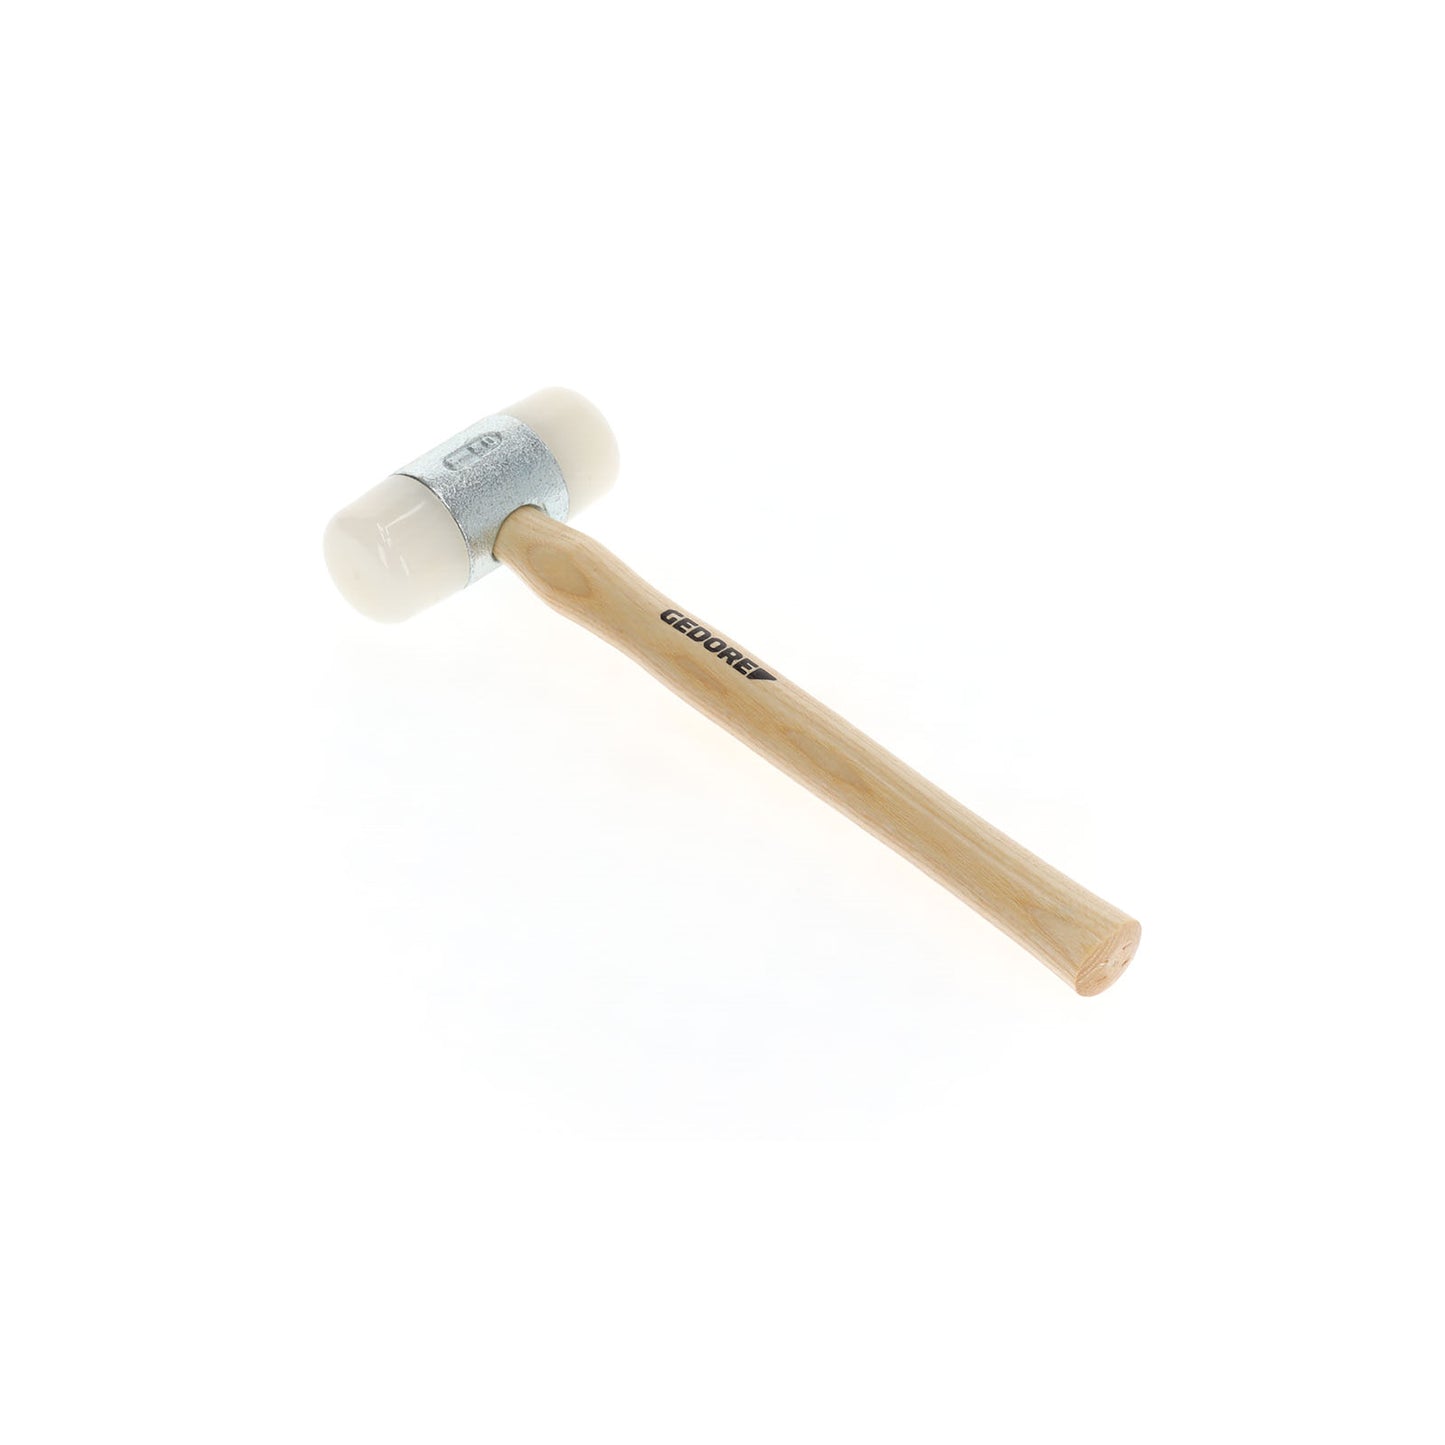 GEDORE 225 E-50 - Nylon mouth hammer d 5cm (8805900)